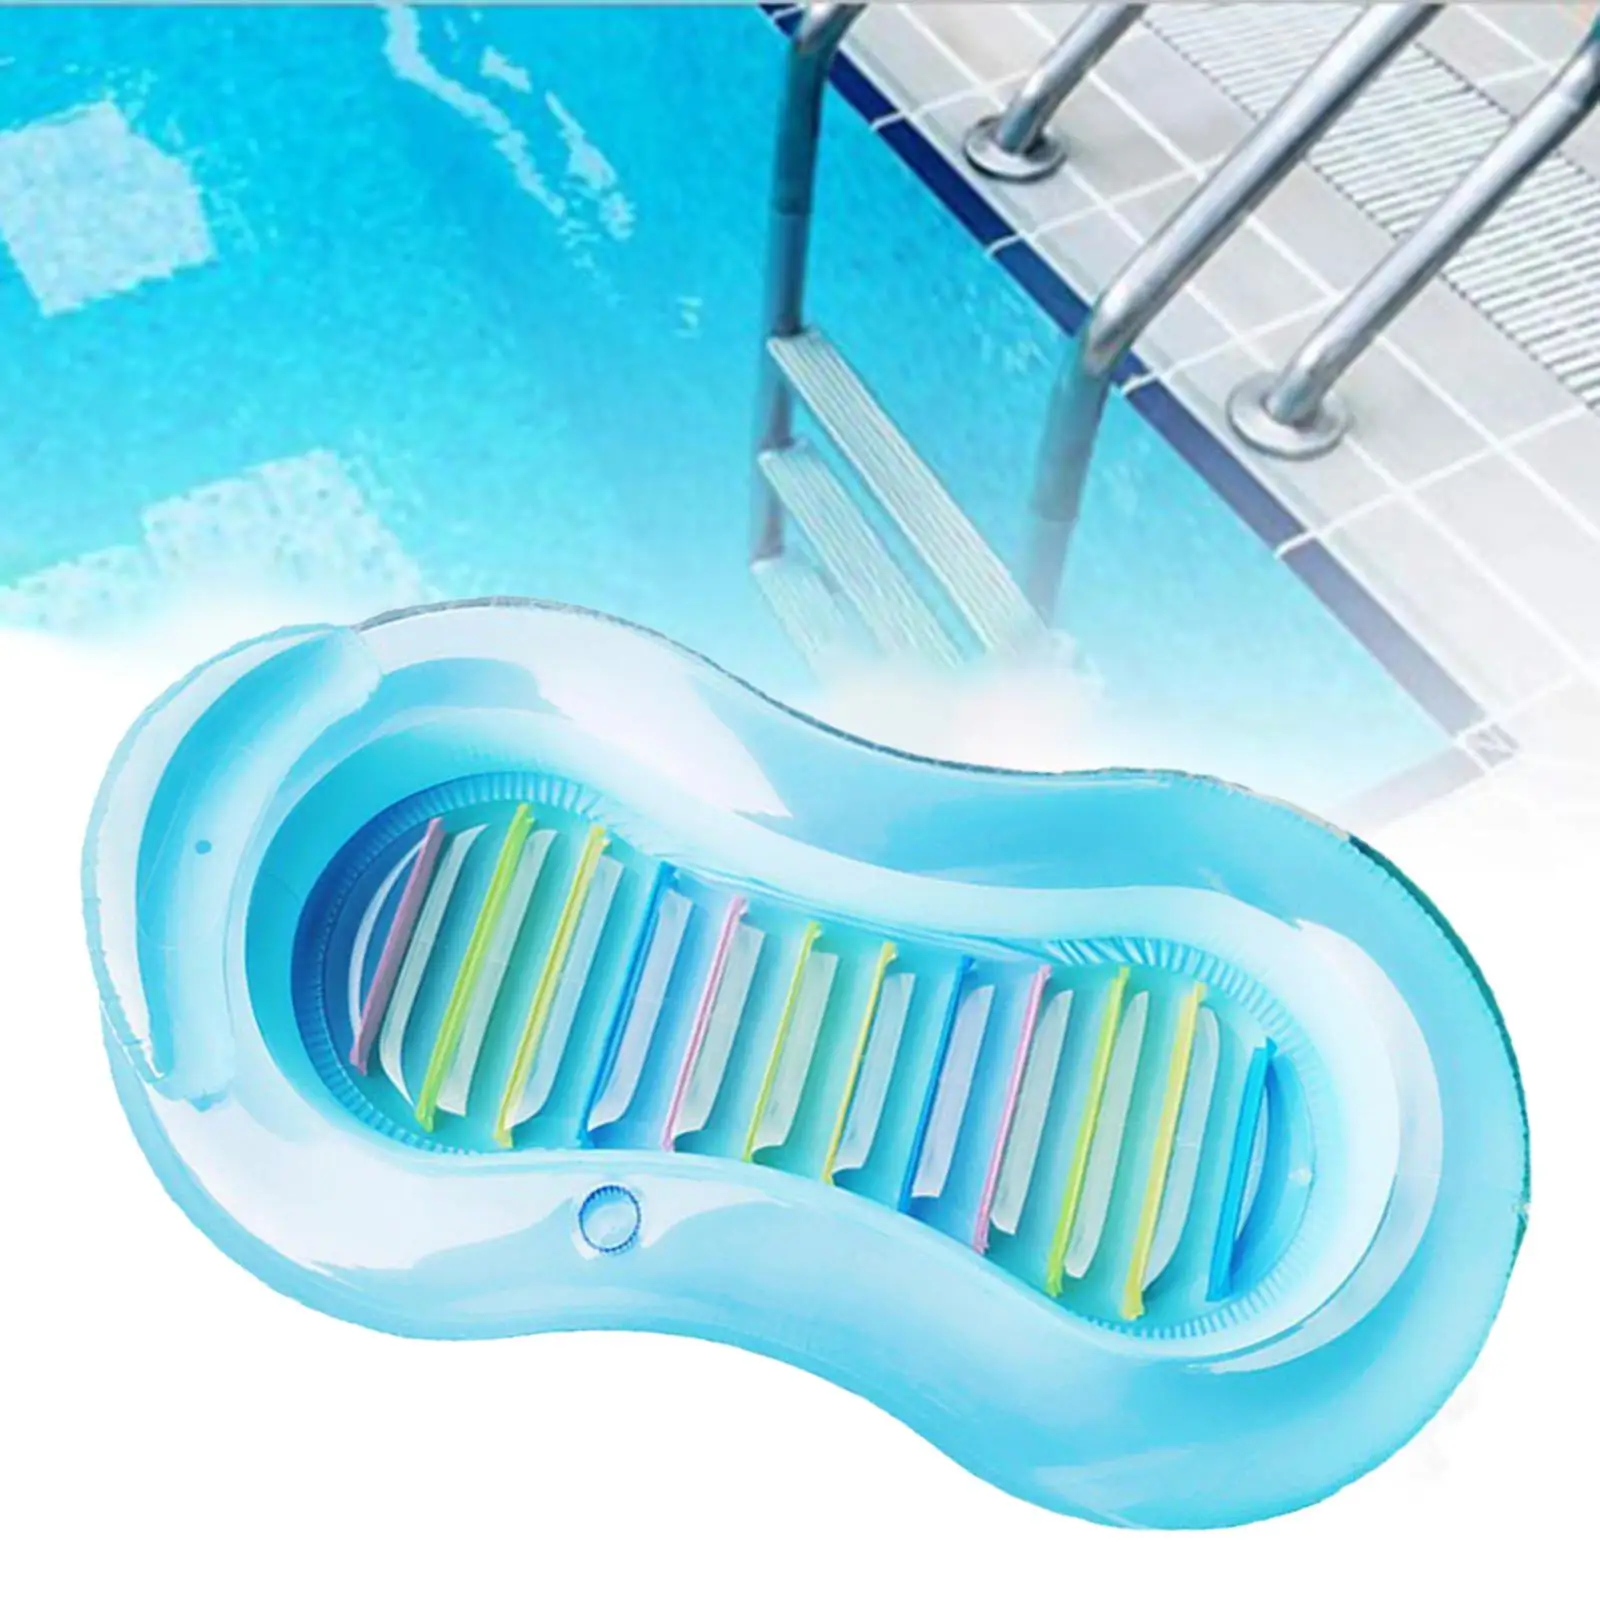 PVC Pool Floats Hammock, Pool Floats Lounge, Water Mattress Mat, Water Floating Rafts, Pool Floats